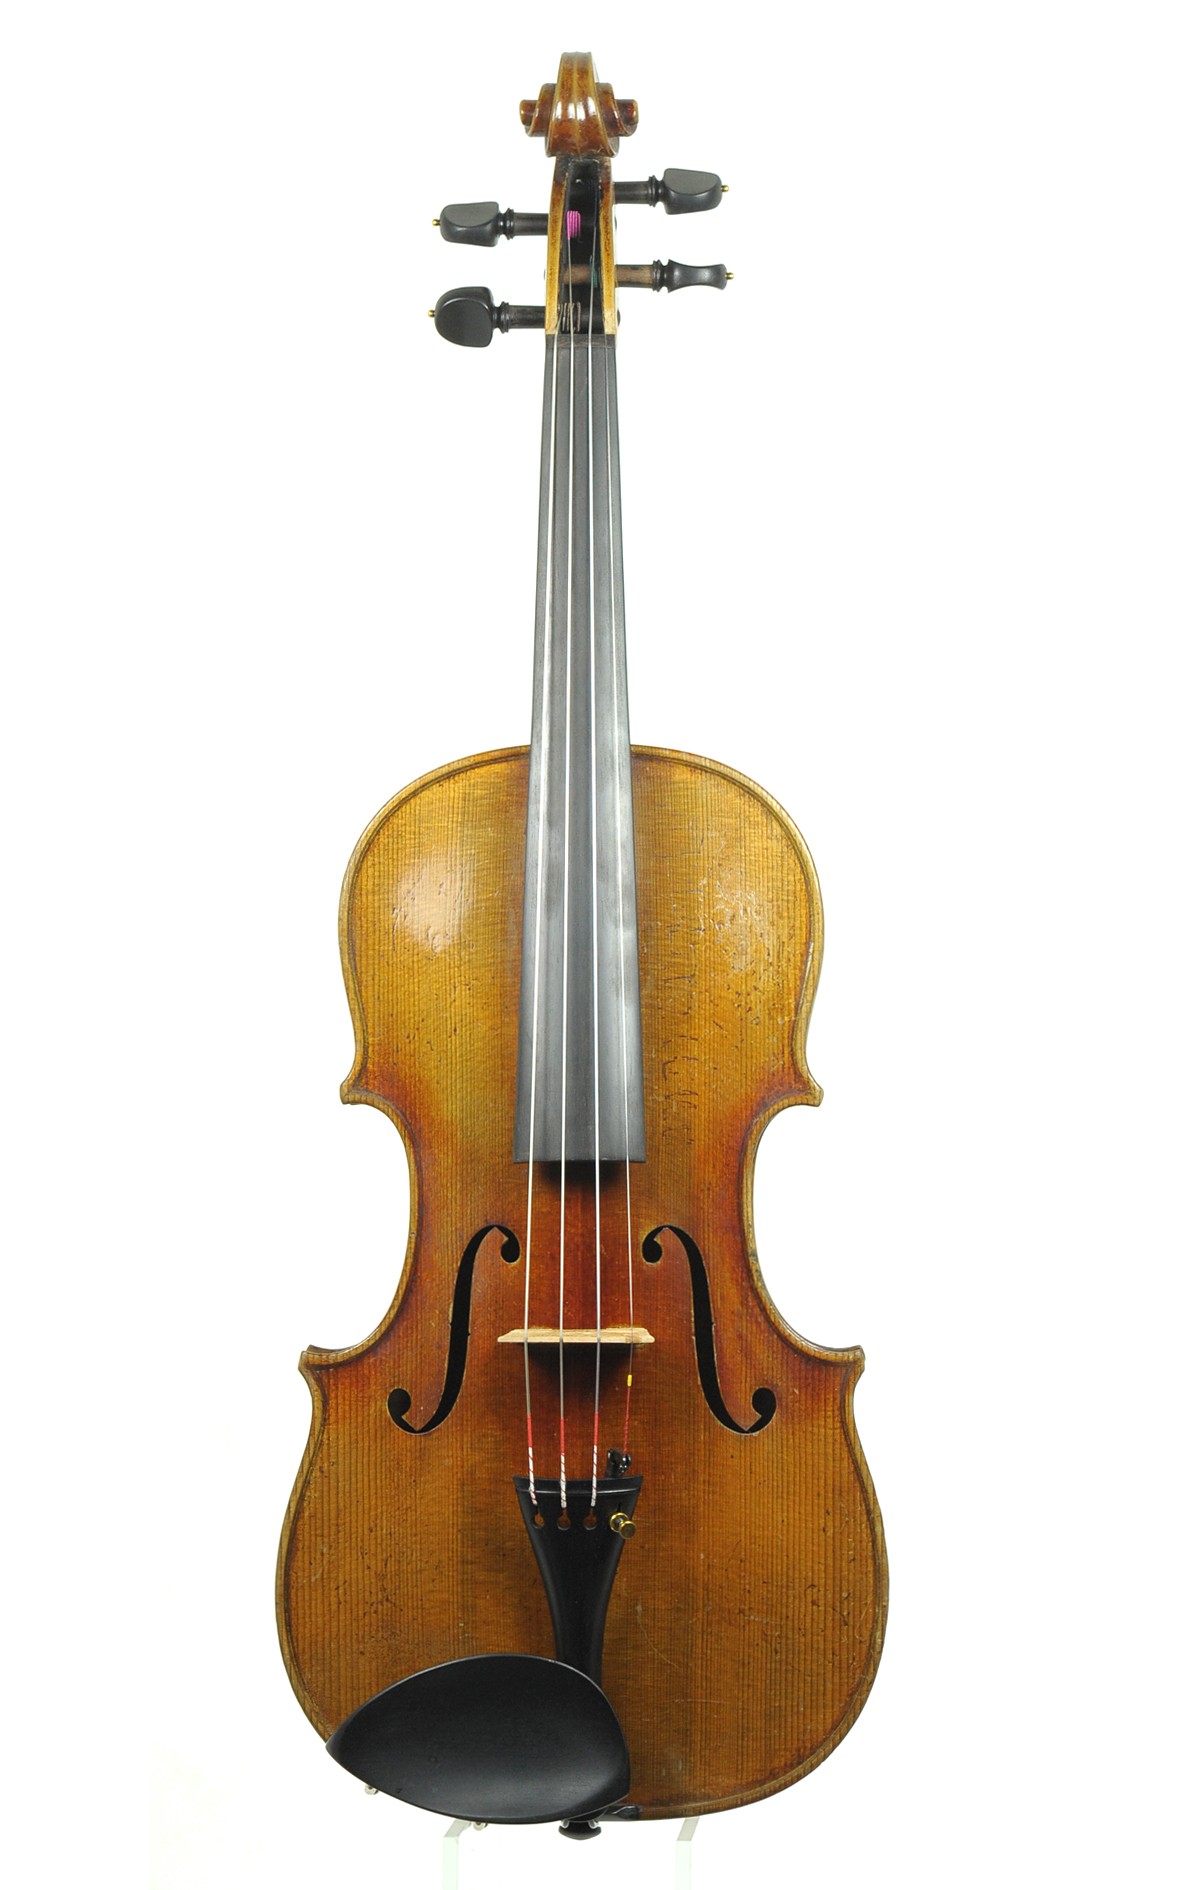 Hopf violin from Klingenthal, Saxony, approx. 1880 - top